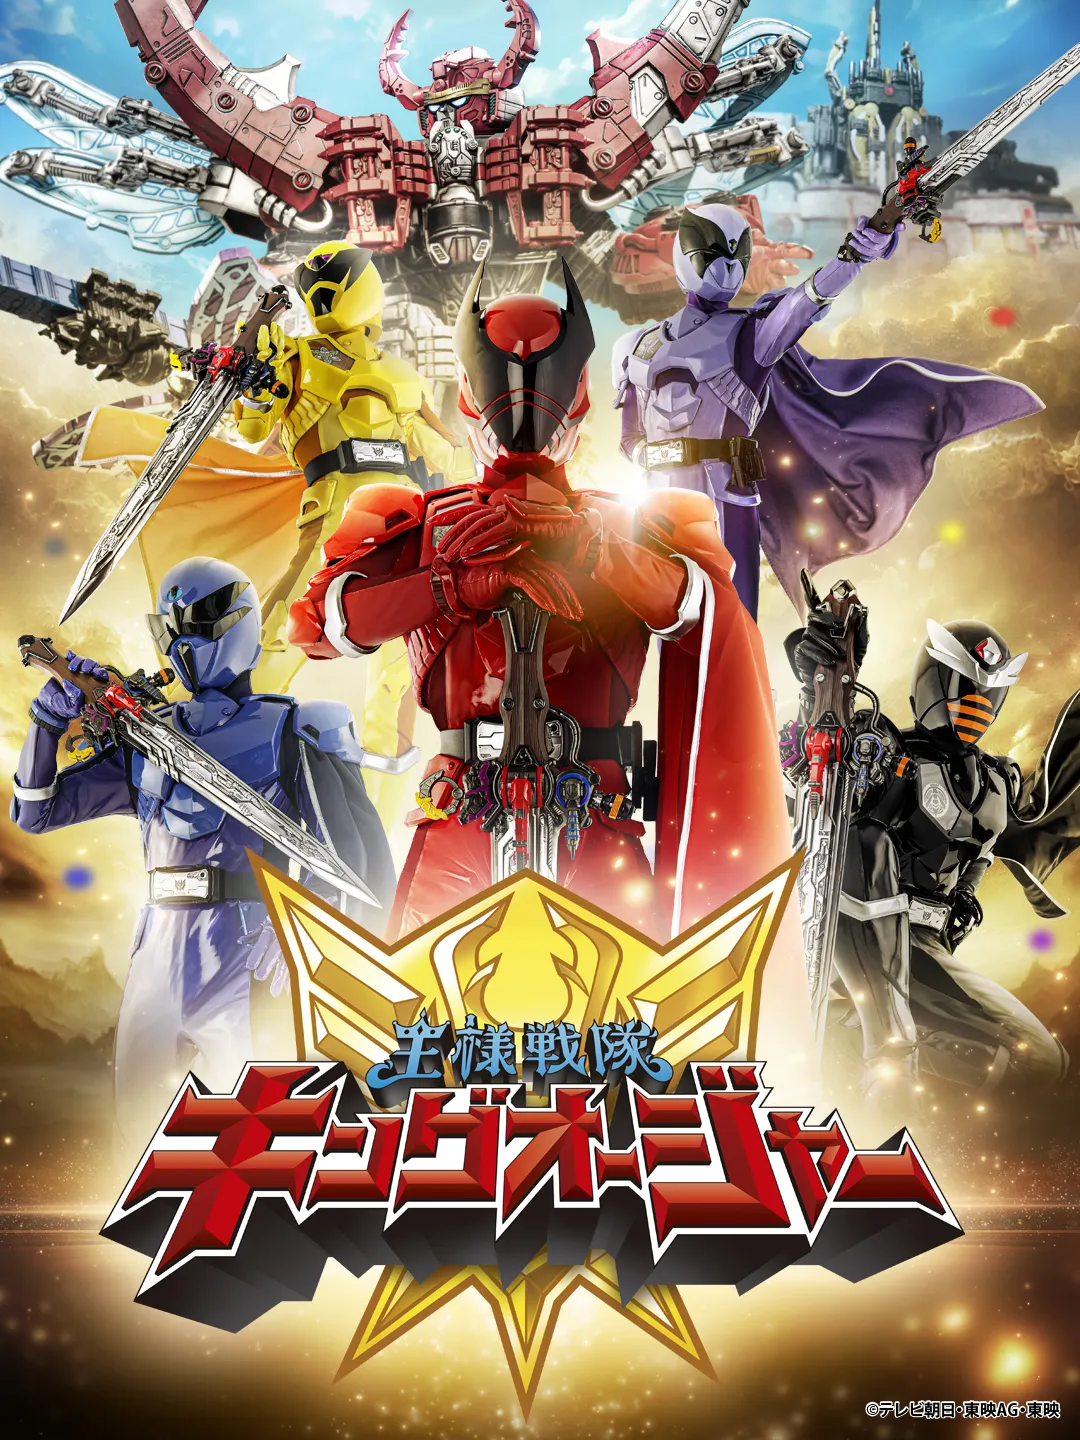 2023's Super Sentai Show is RoyaltyThemed KingOhger Siliconera